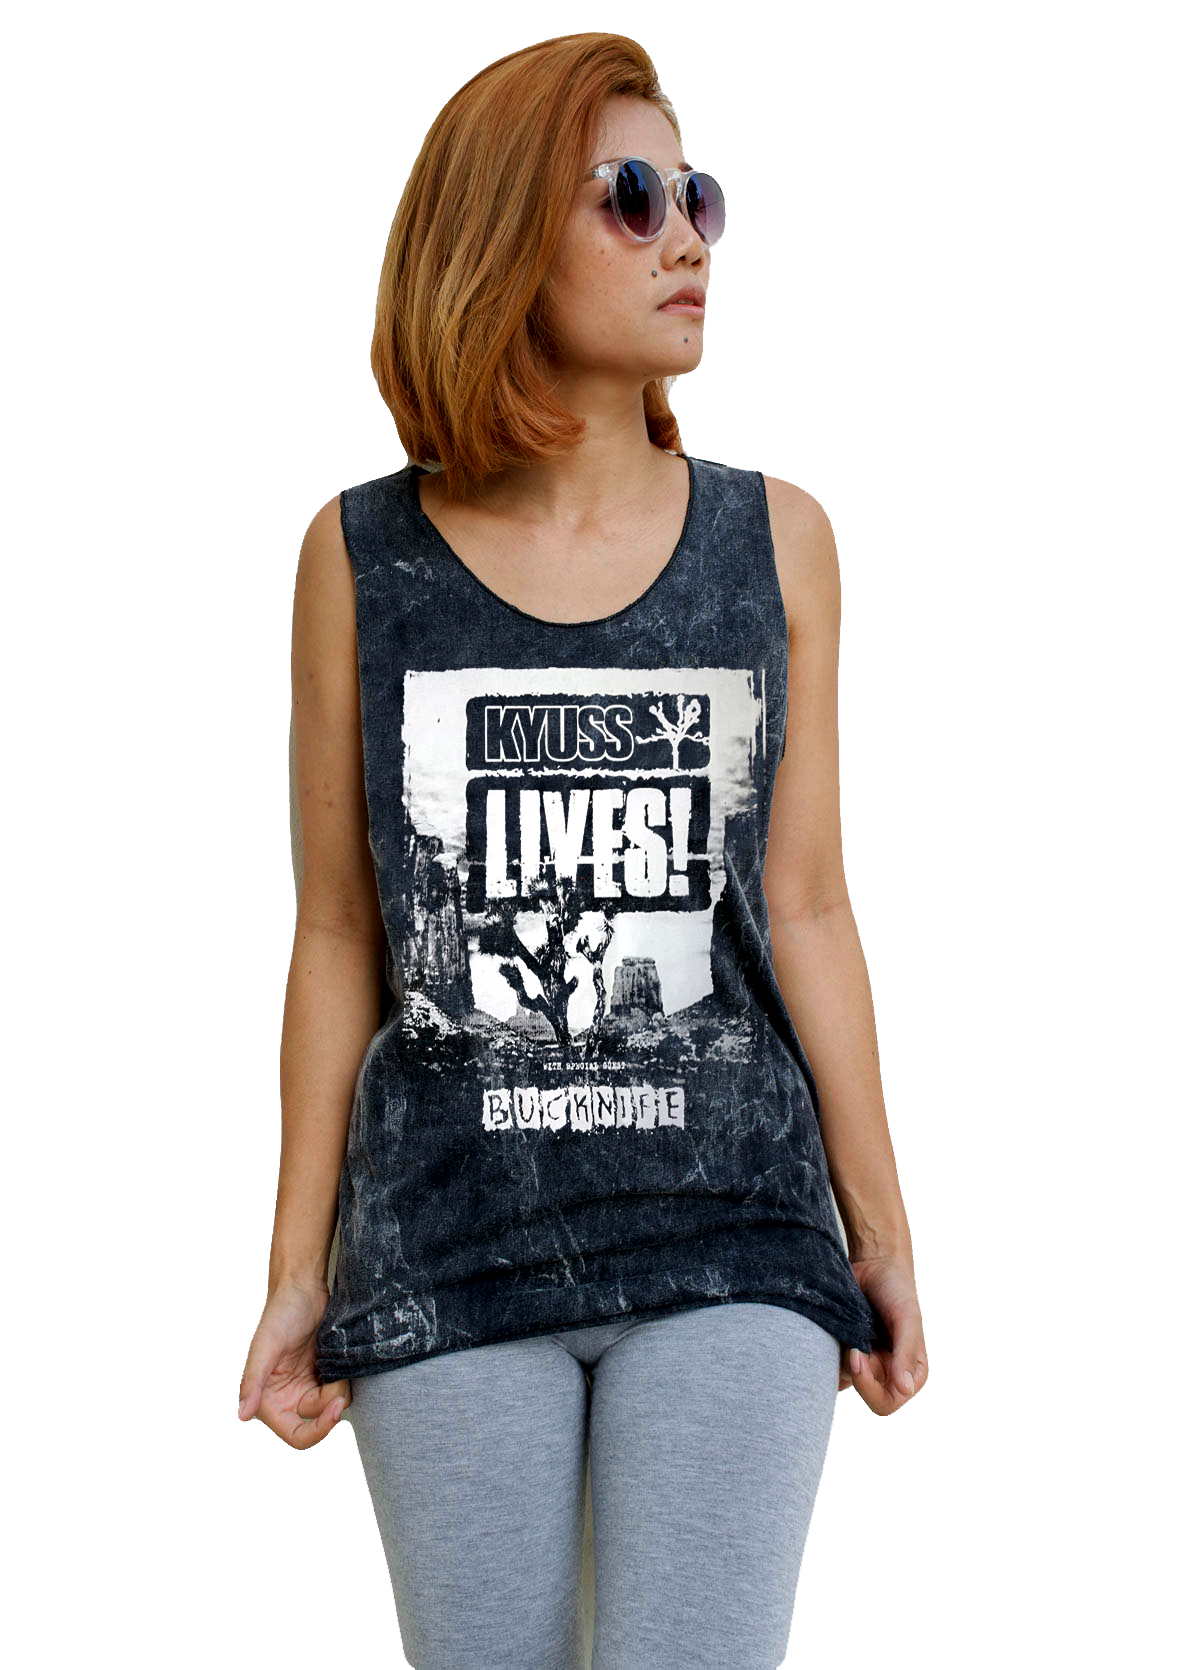 Unisex Kyuss Tank-Top Singlet vest Sleeveless T-shirt